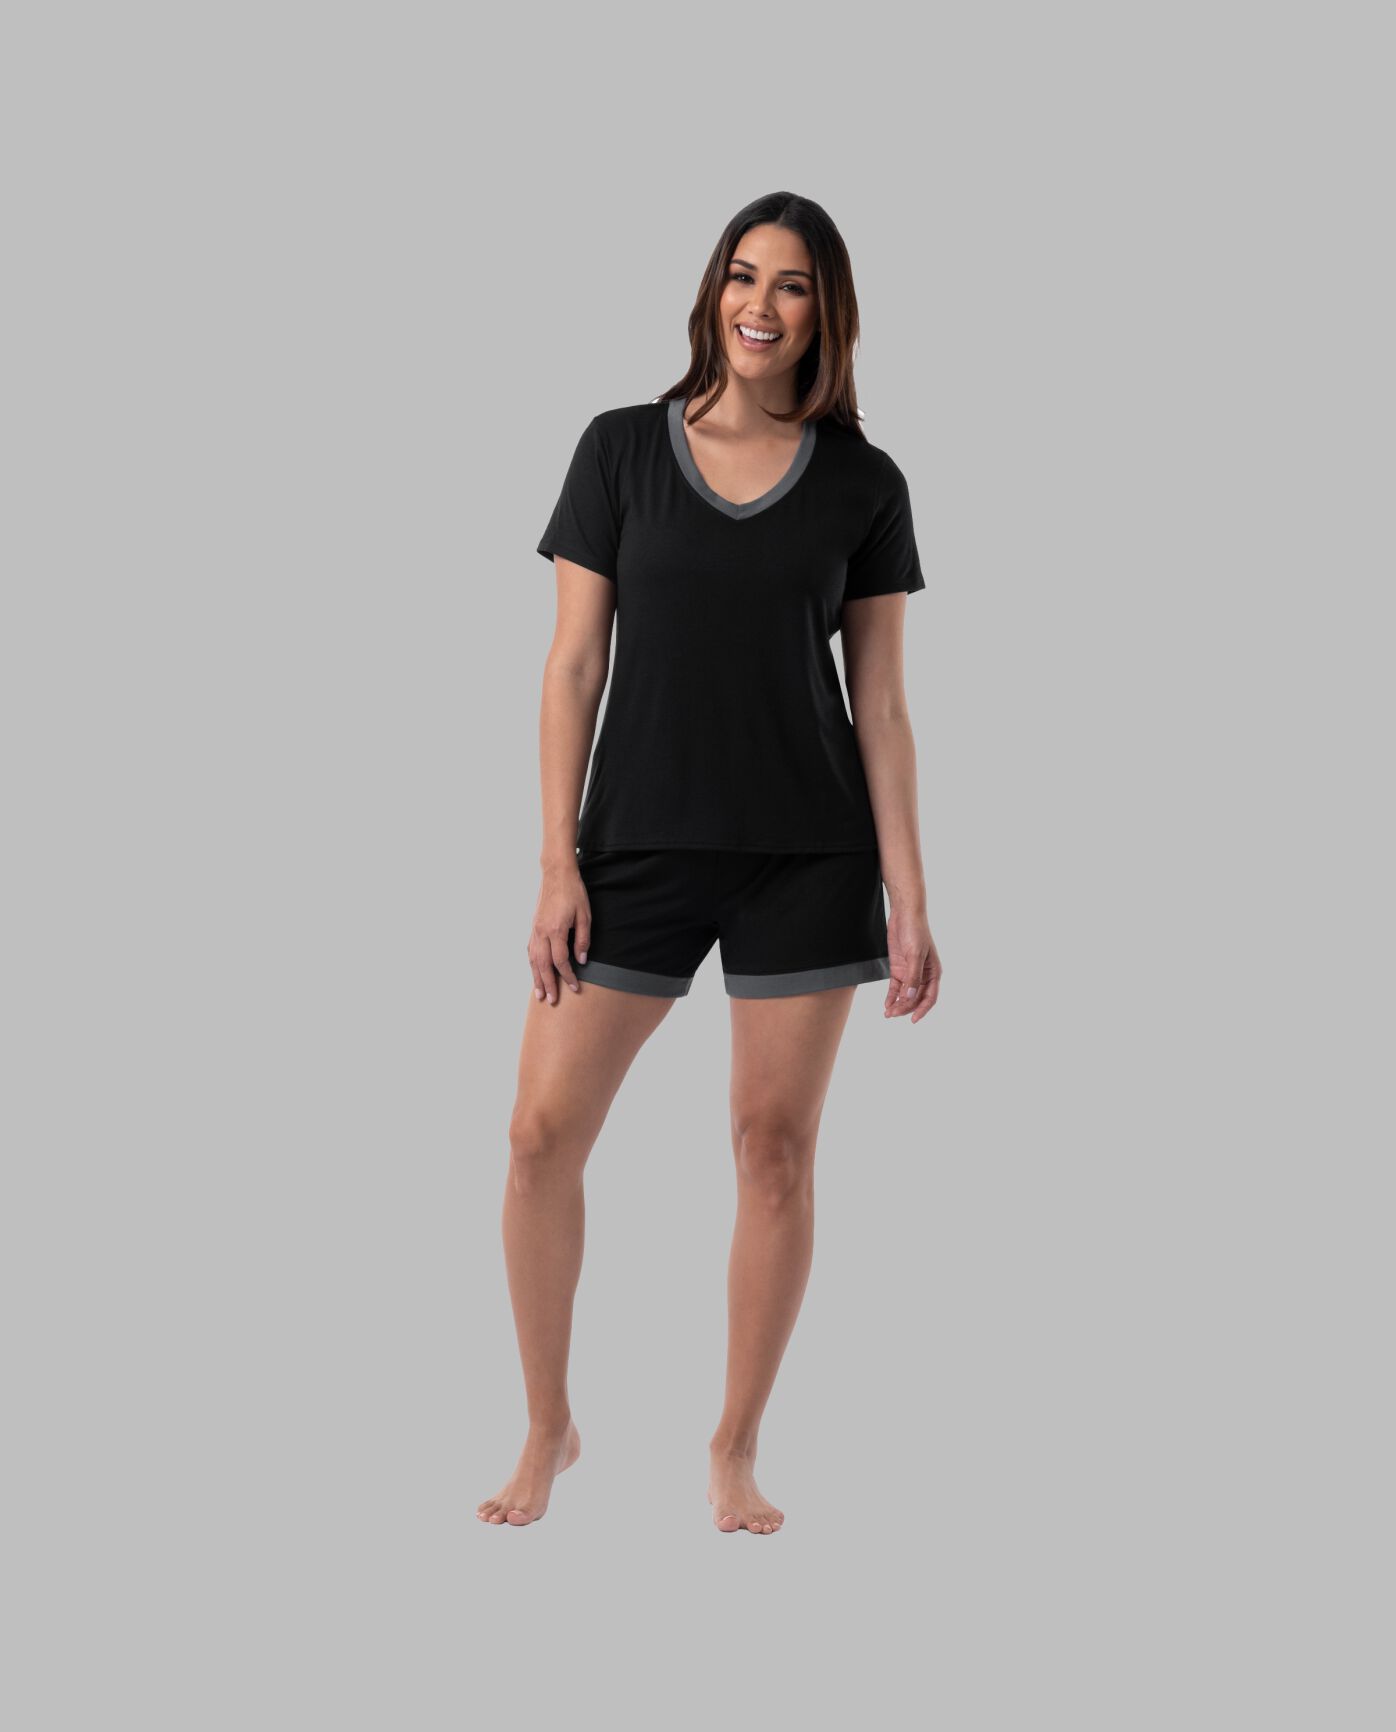 Women's Soft & Breathable V-Neck T-shirt and Shorts, 2-Piece Pajama Set 